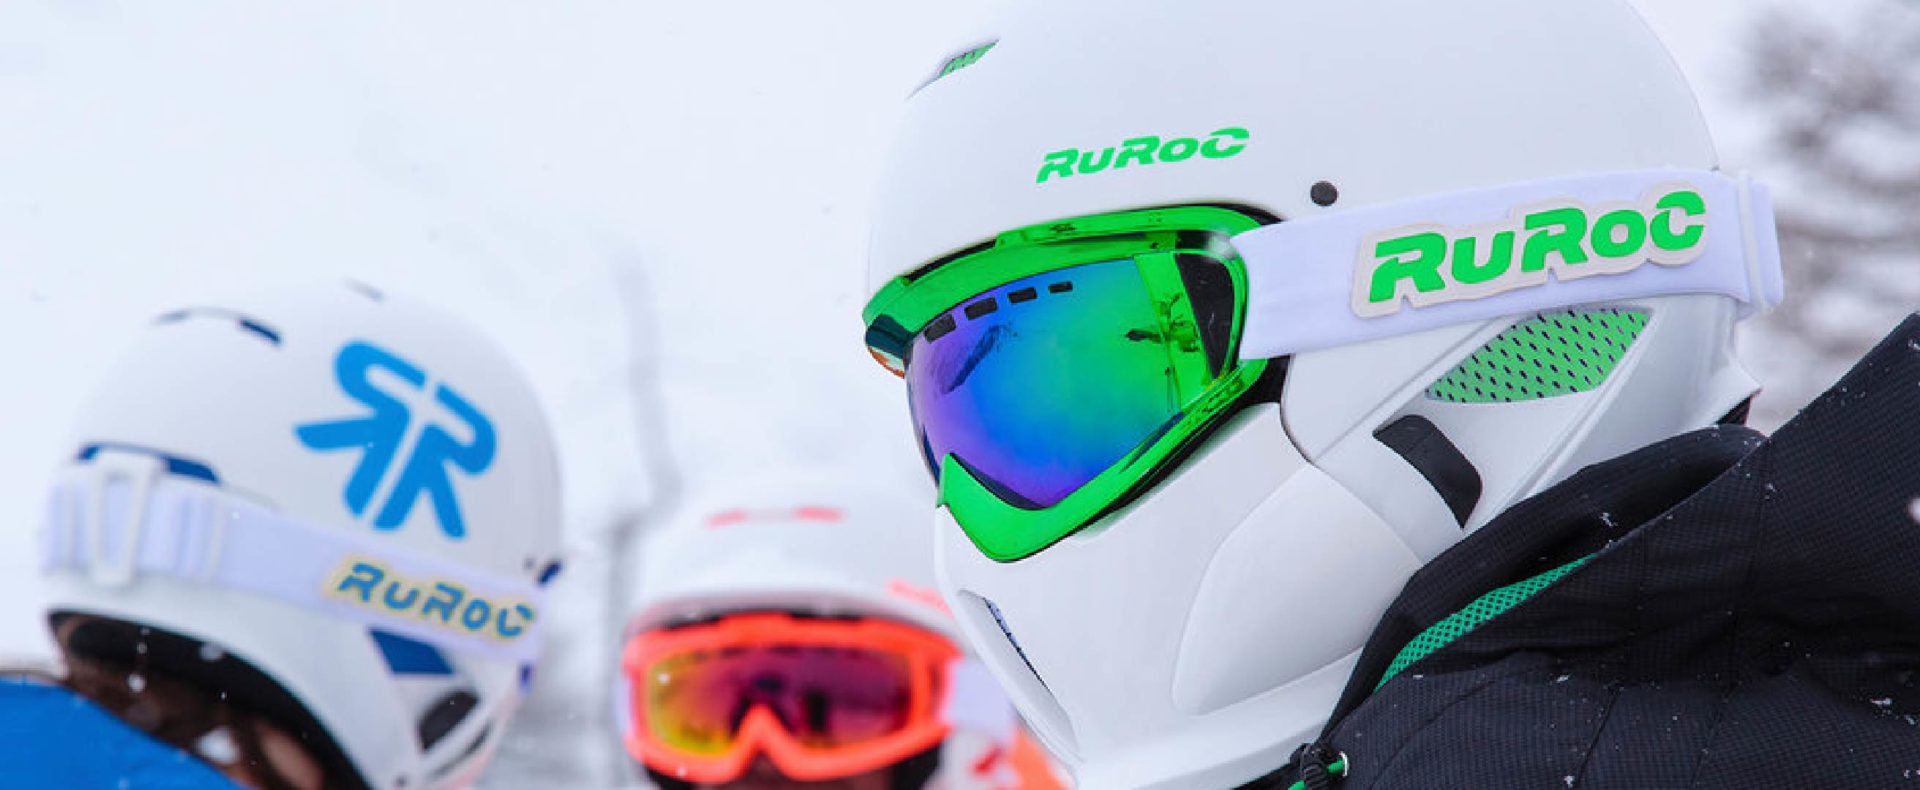 Ruroc Helmets Feature Image